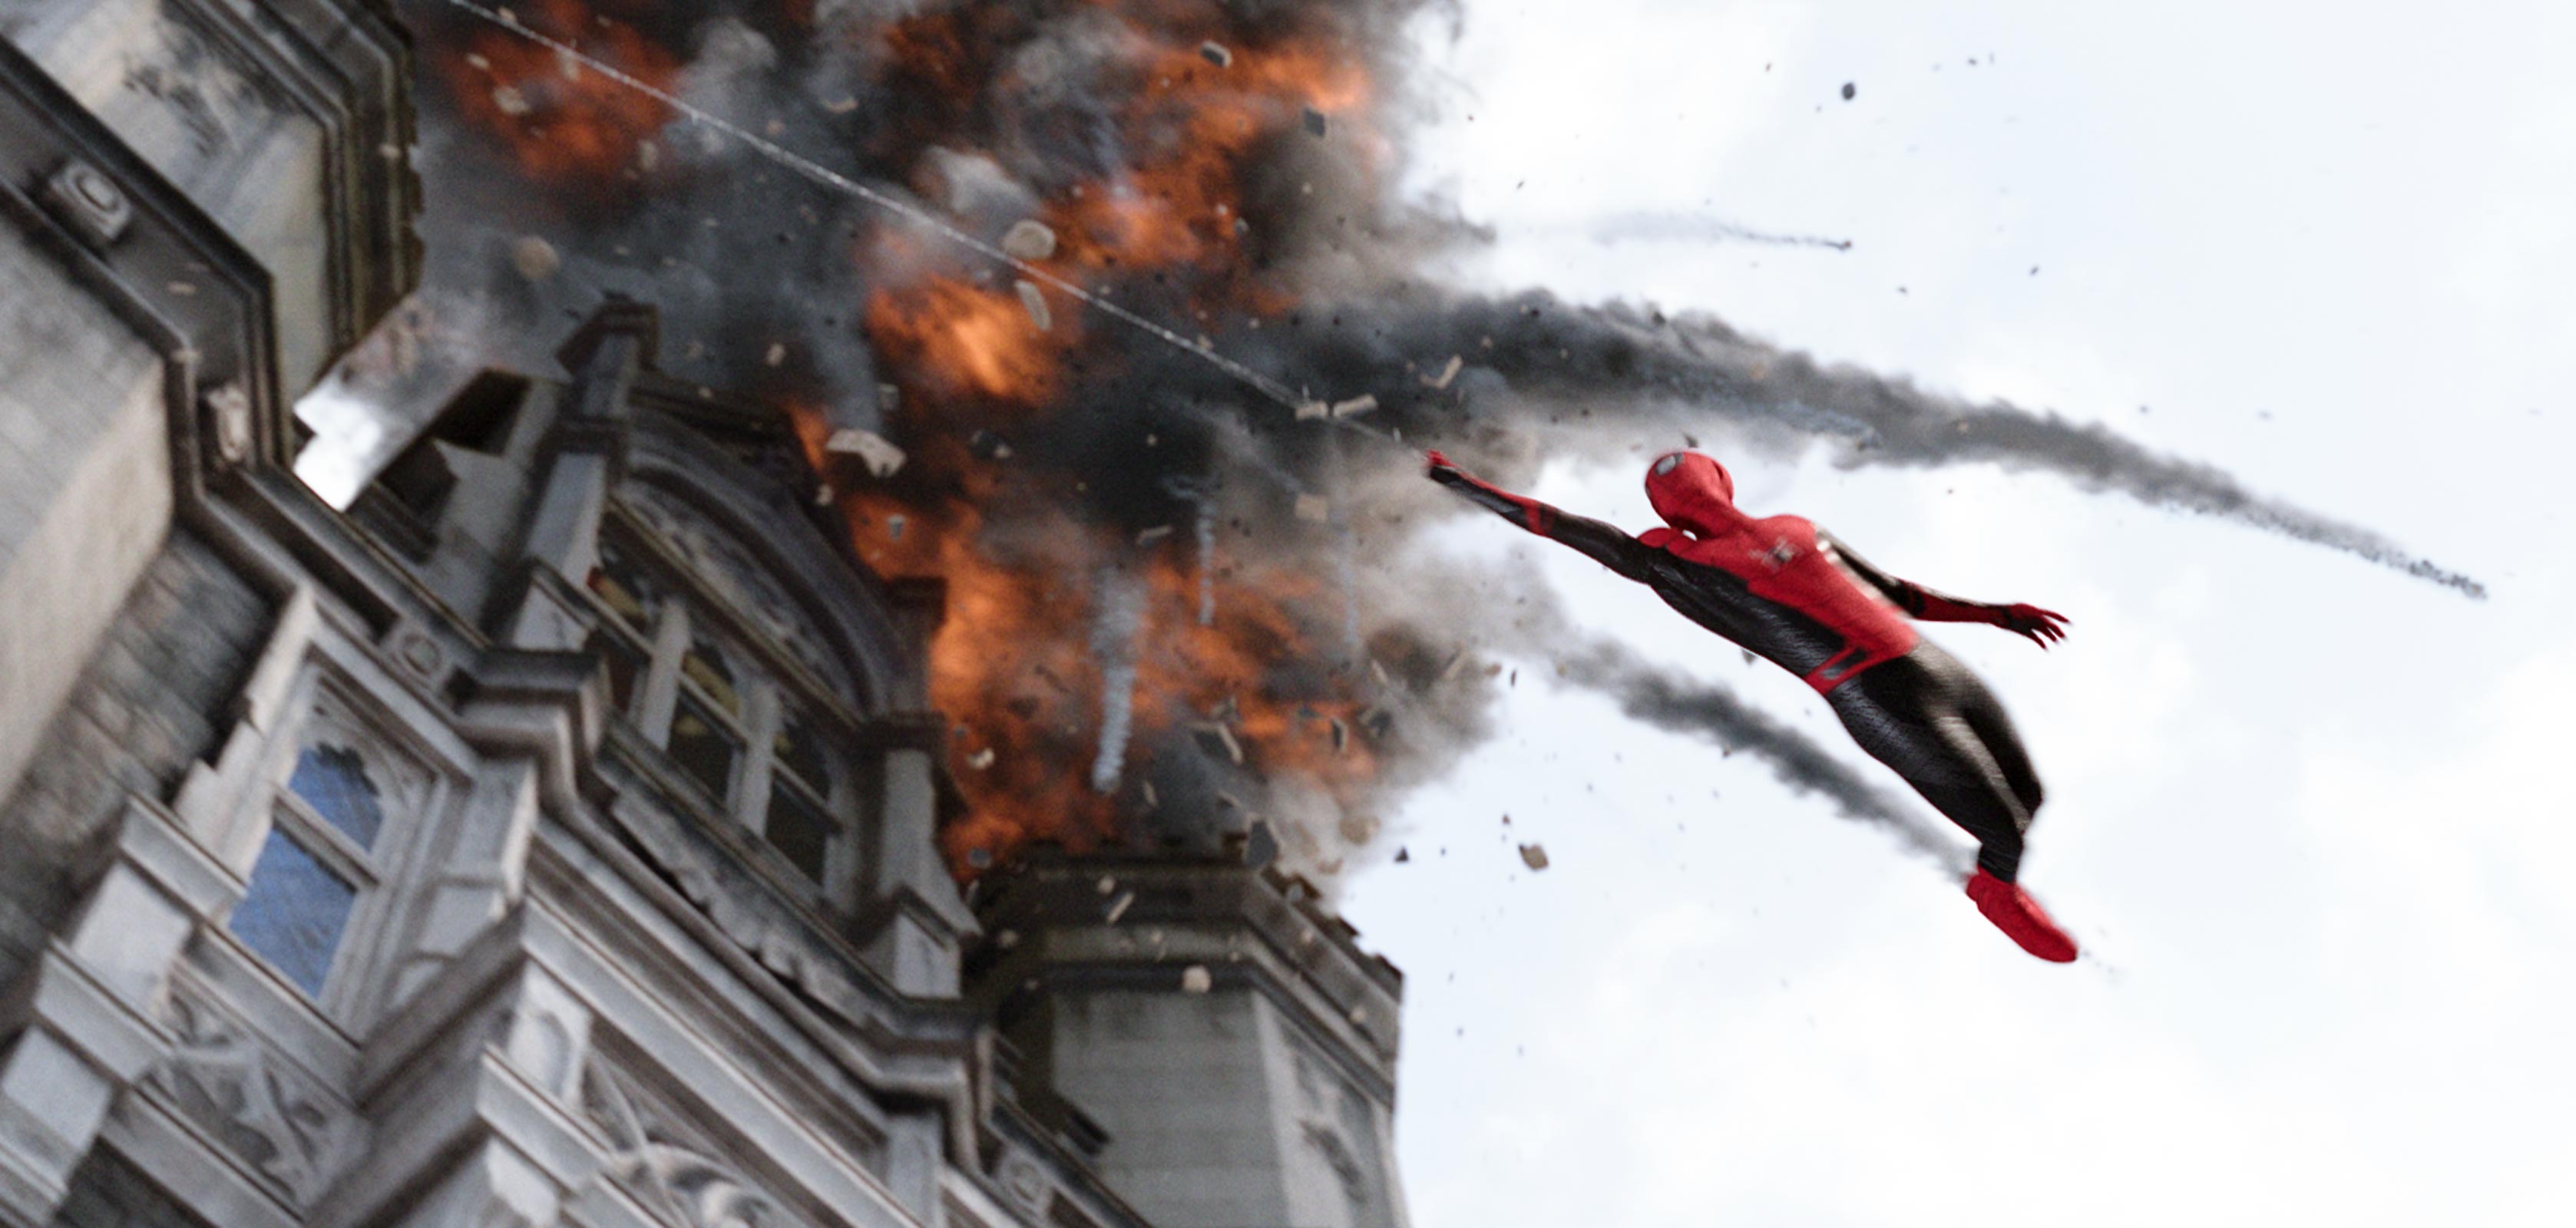 Spider-Man: Far From Home Will Cross $1 Billion Worldwide Today